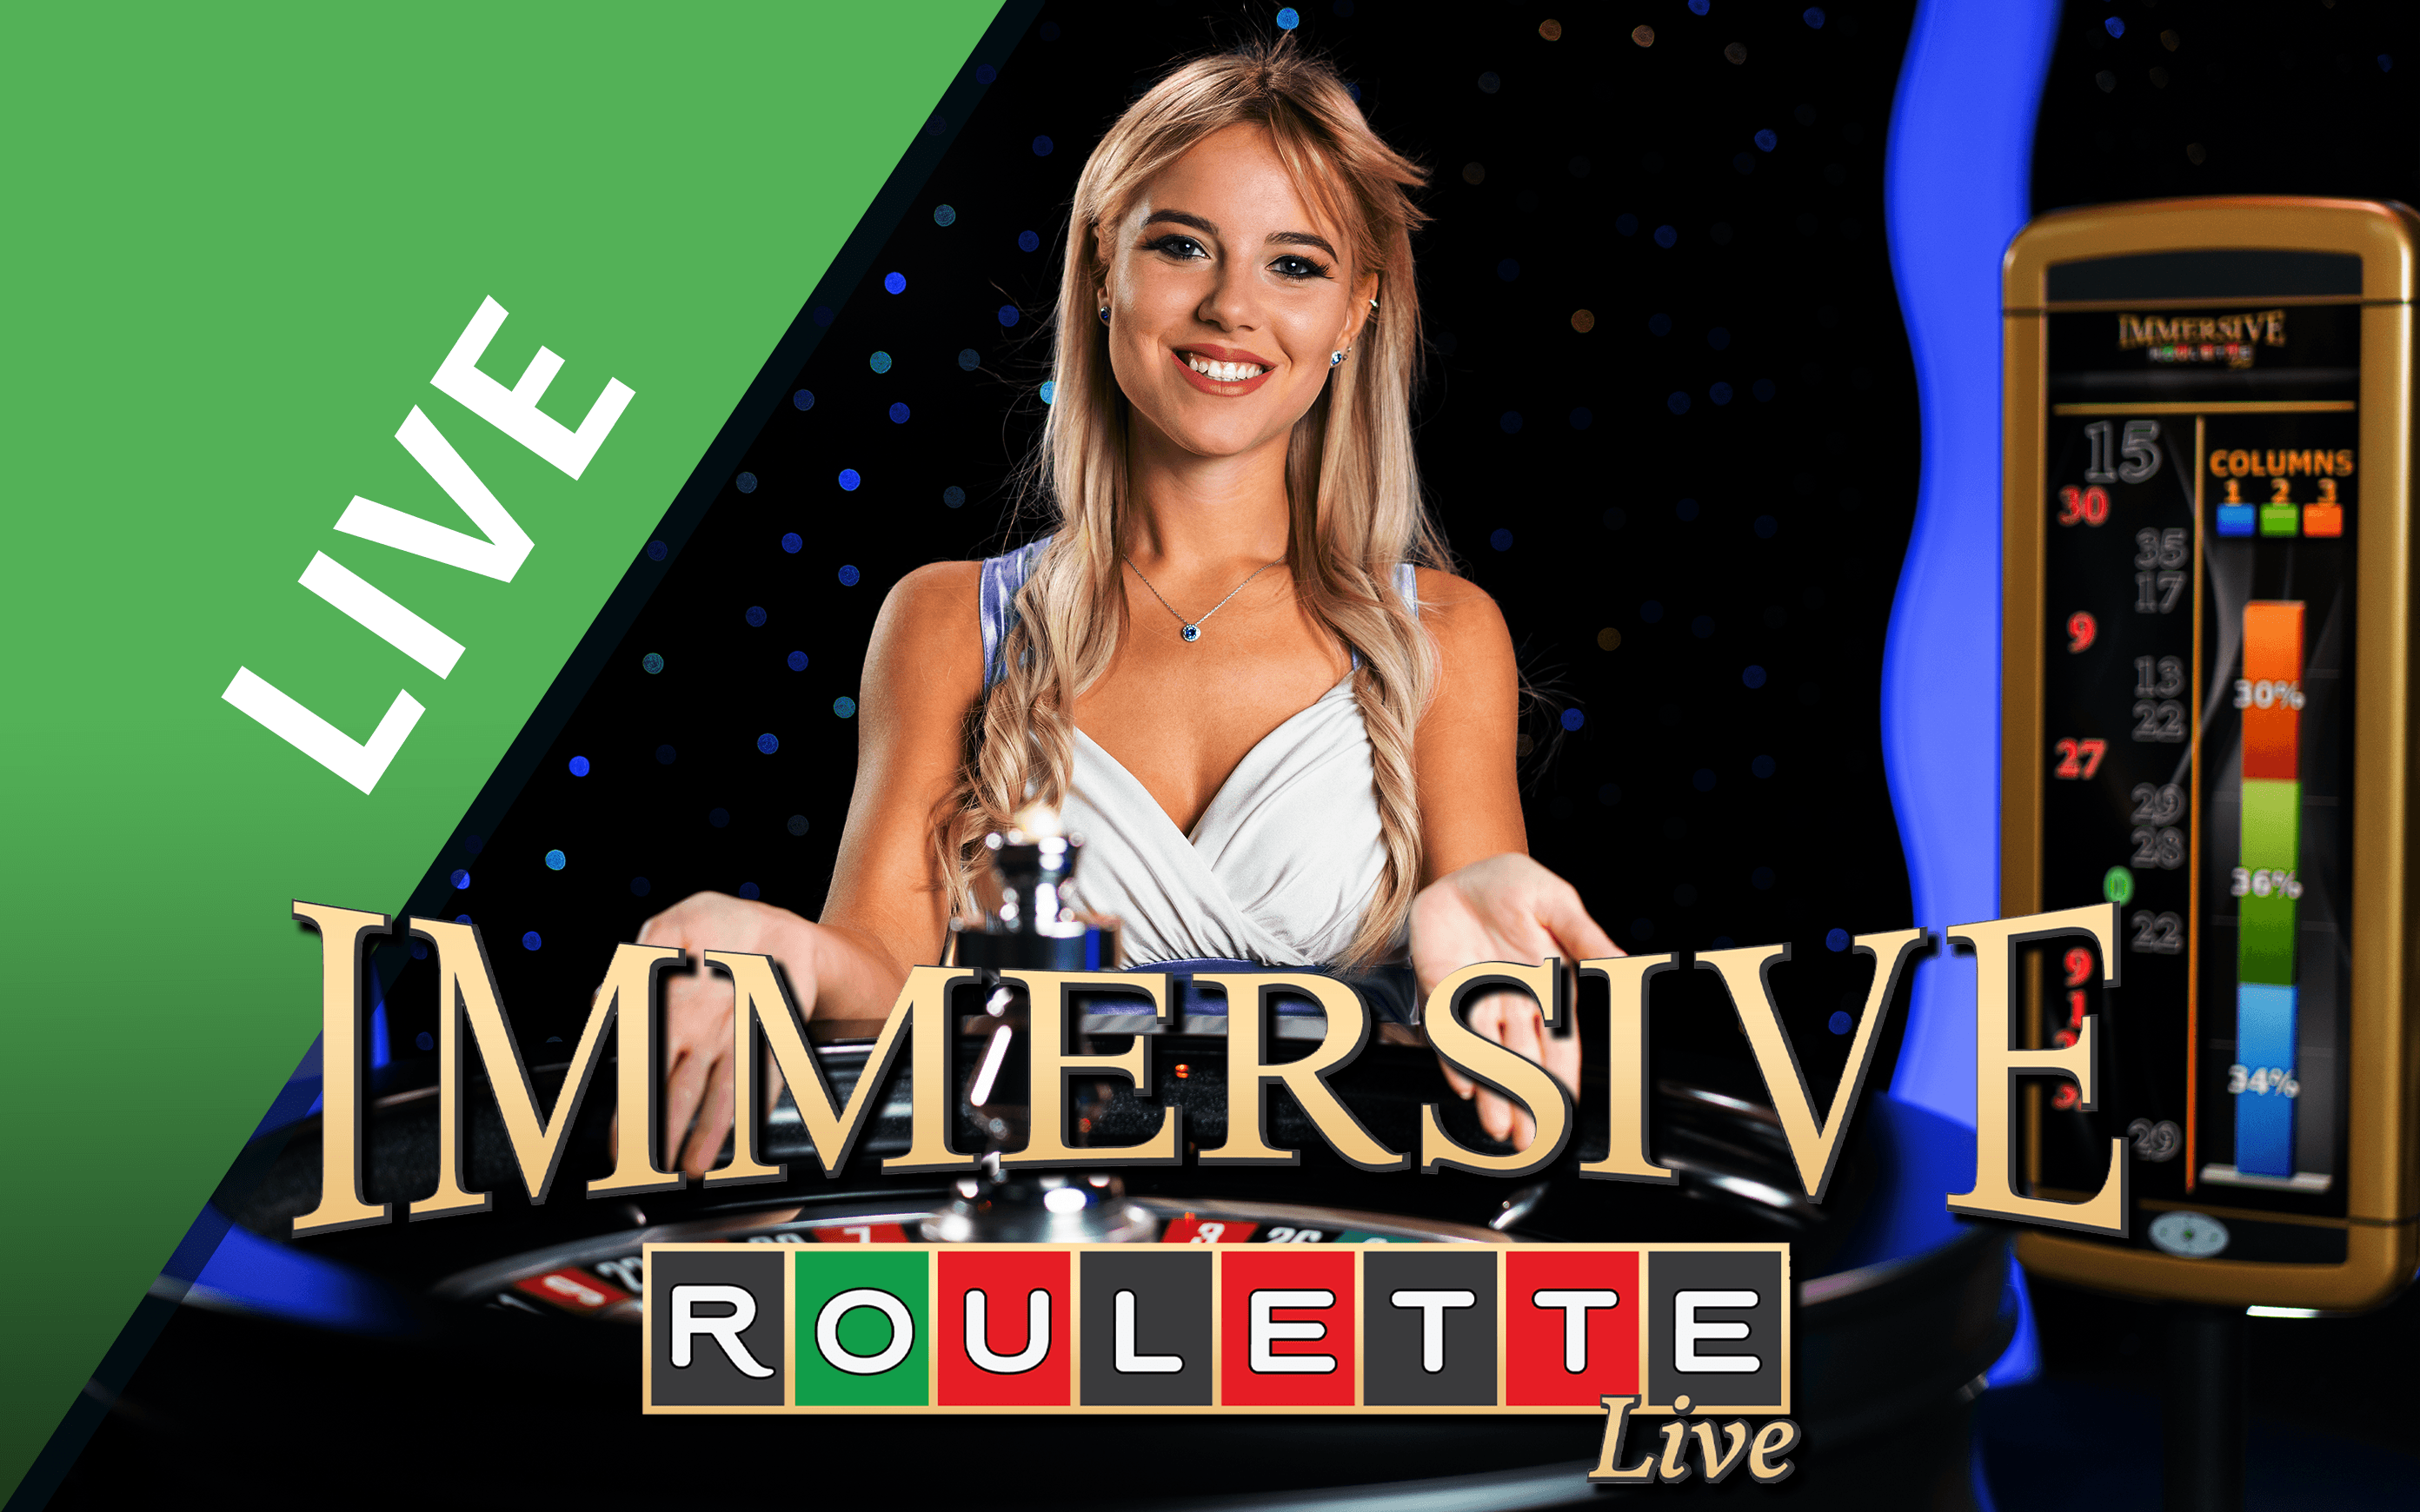 Play Immersive Roulette on Starcasino.be online casino